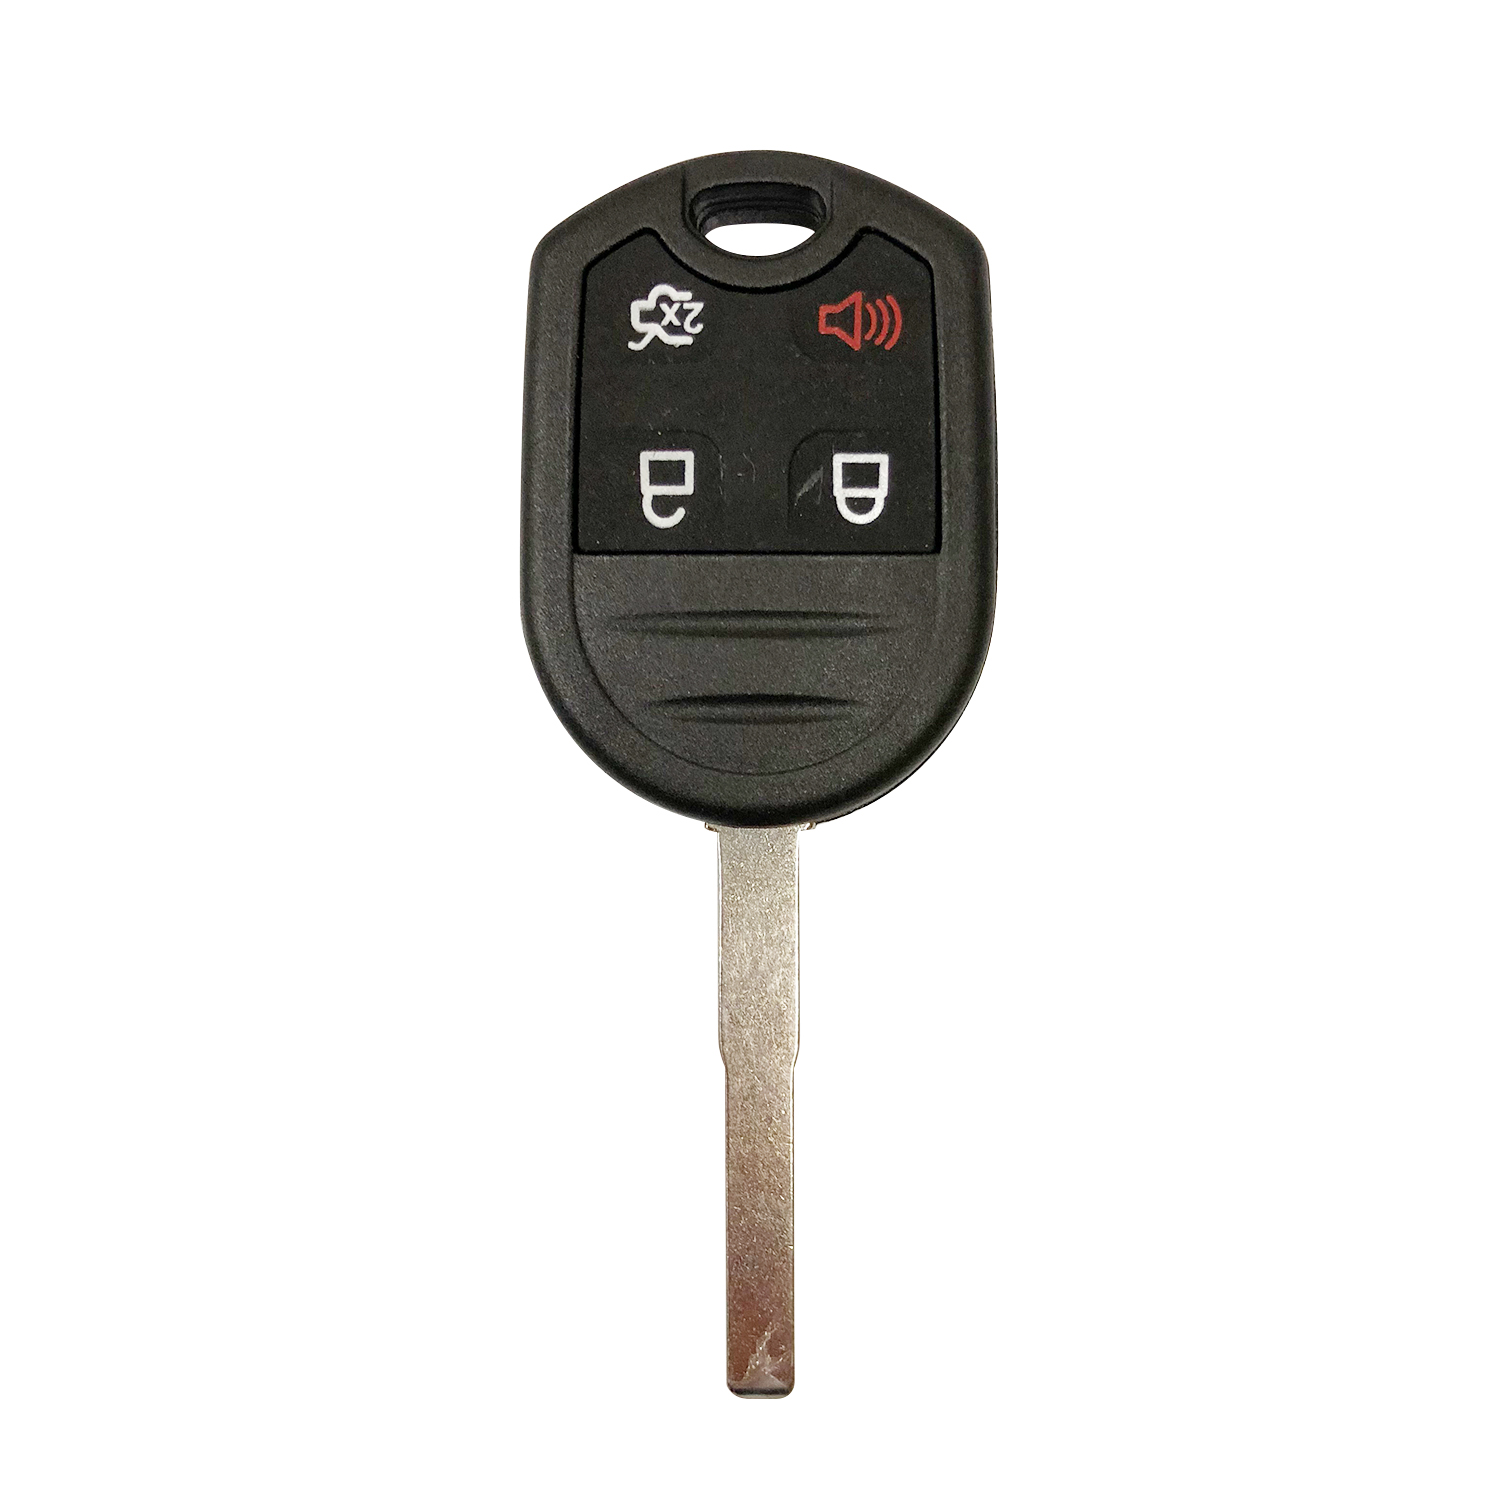 Car Key Fob Keyless Entry Remote fits 2013-2017 Ford Fiesta C-Max 2011-2017 Ford Fiesta KR55WK48801